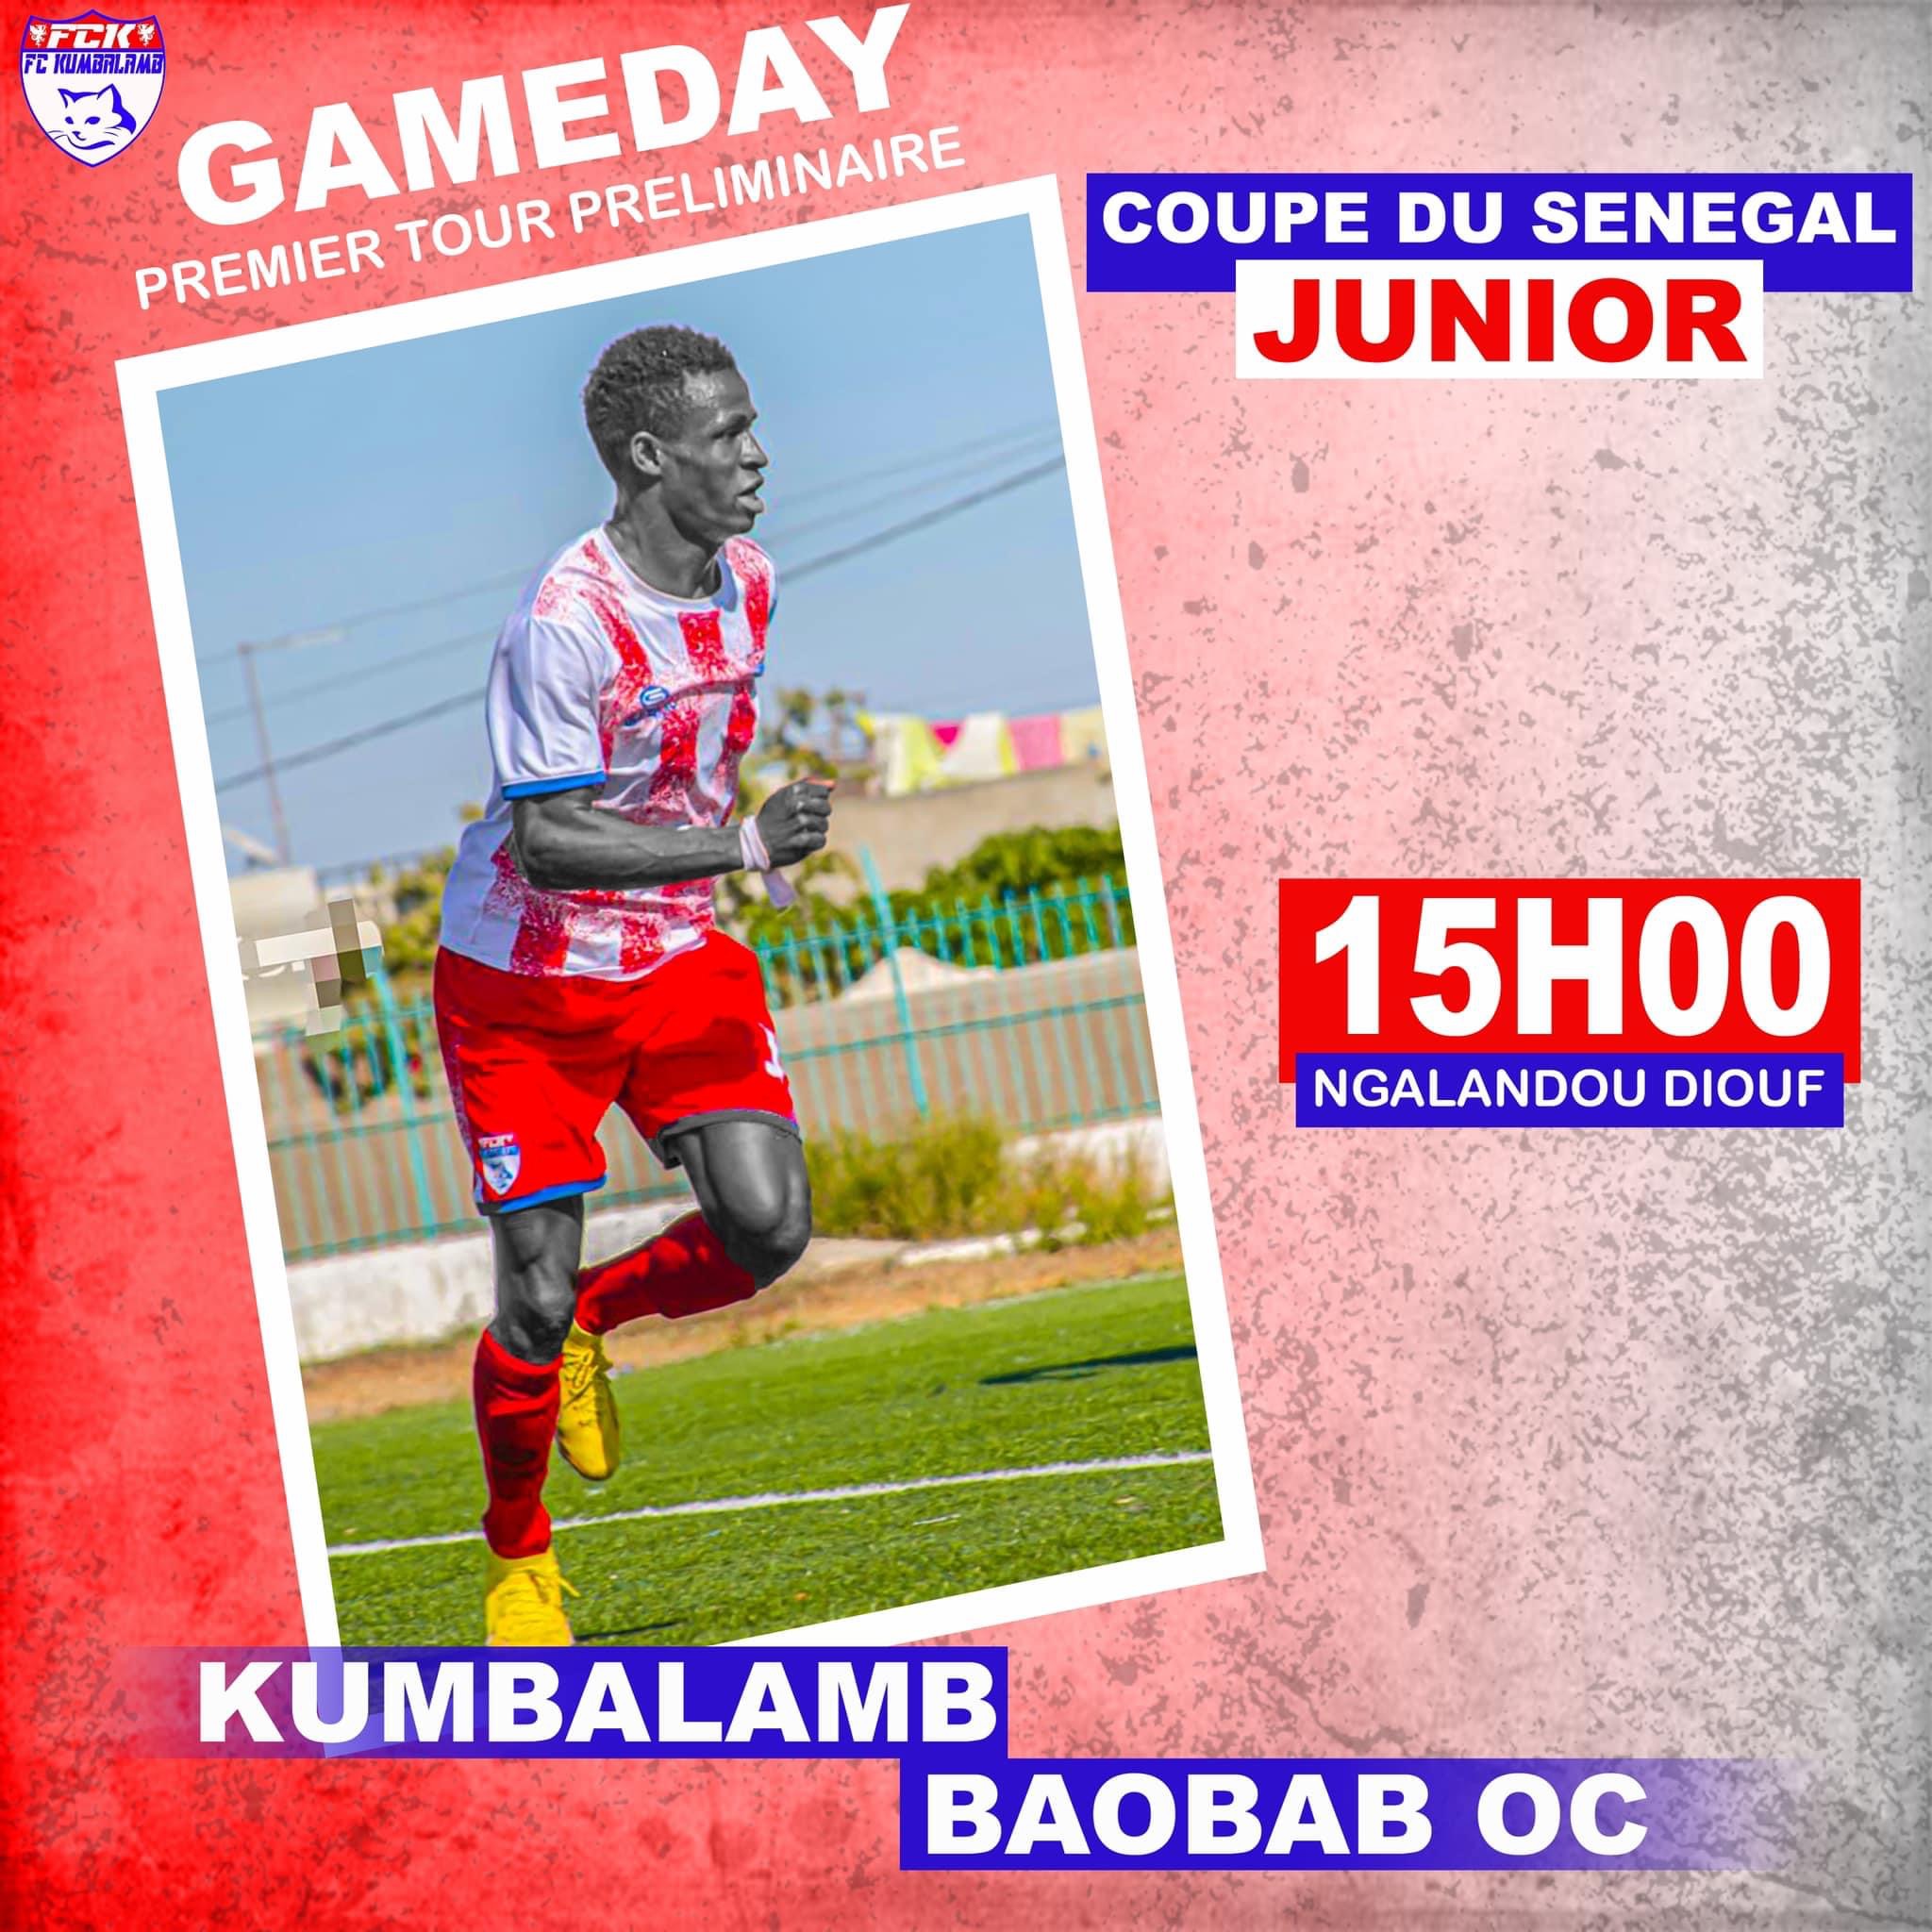 #GameDay: Coupe Du Sénégal Junior!!  #FCKL